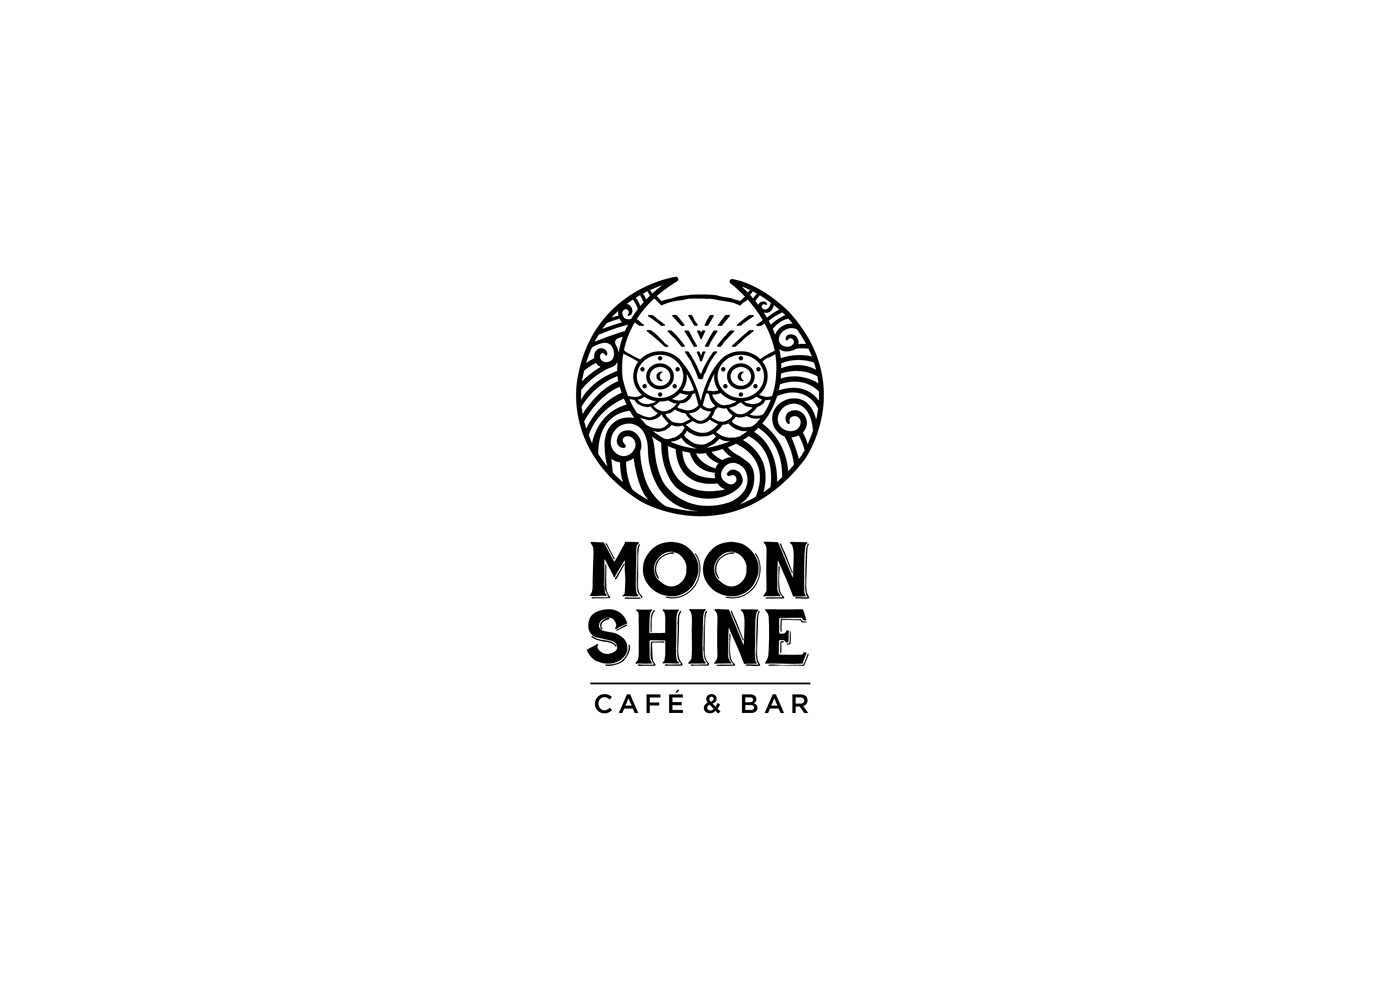 Moonshine cafe bar logo symbol